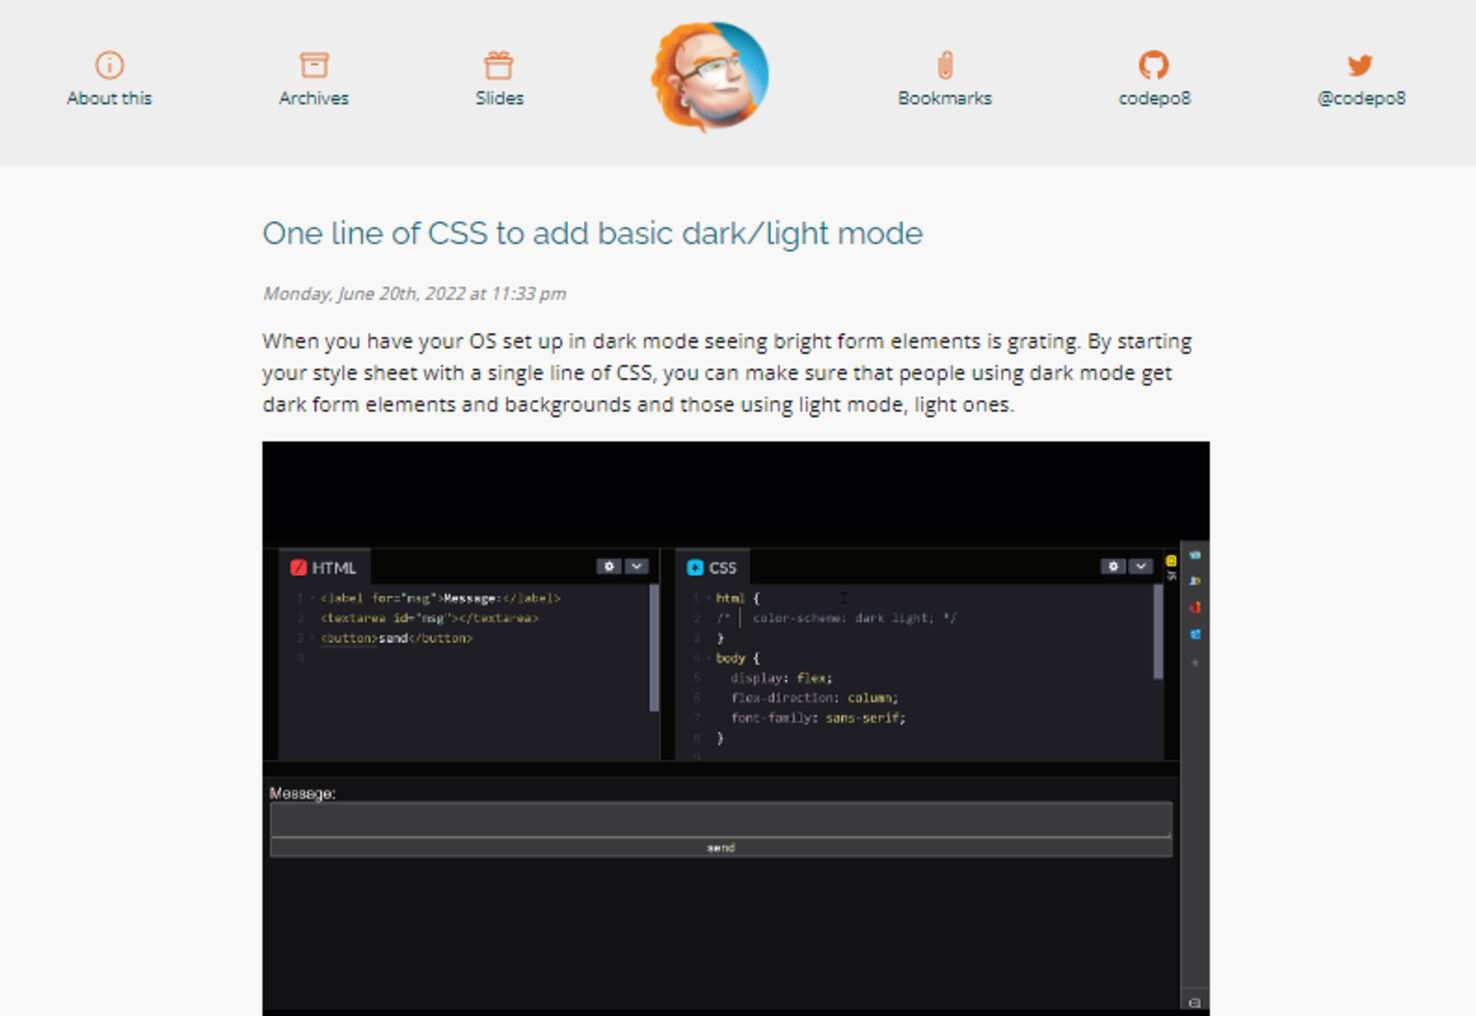 One line of CSS dark or light mode